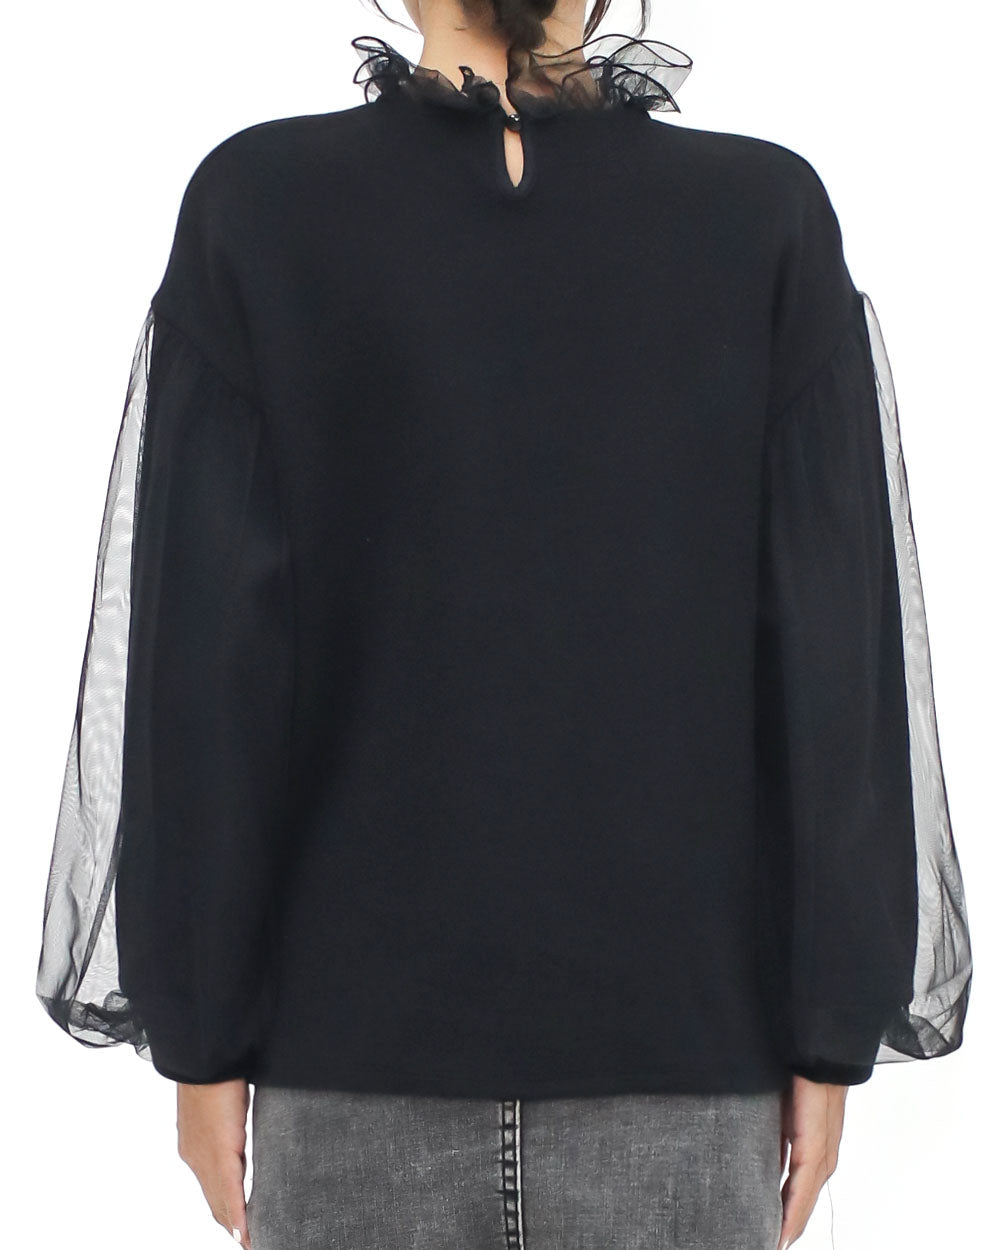 black mesh layer sleeves & neckline sweatshirt top *pre-order*